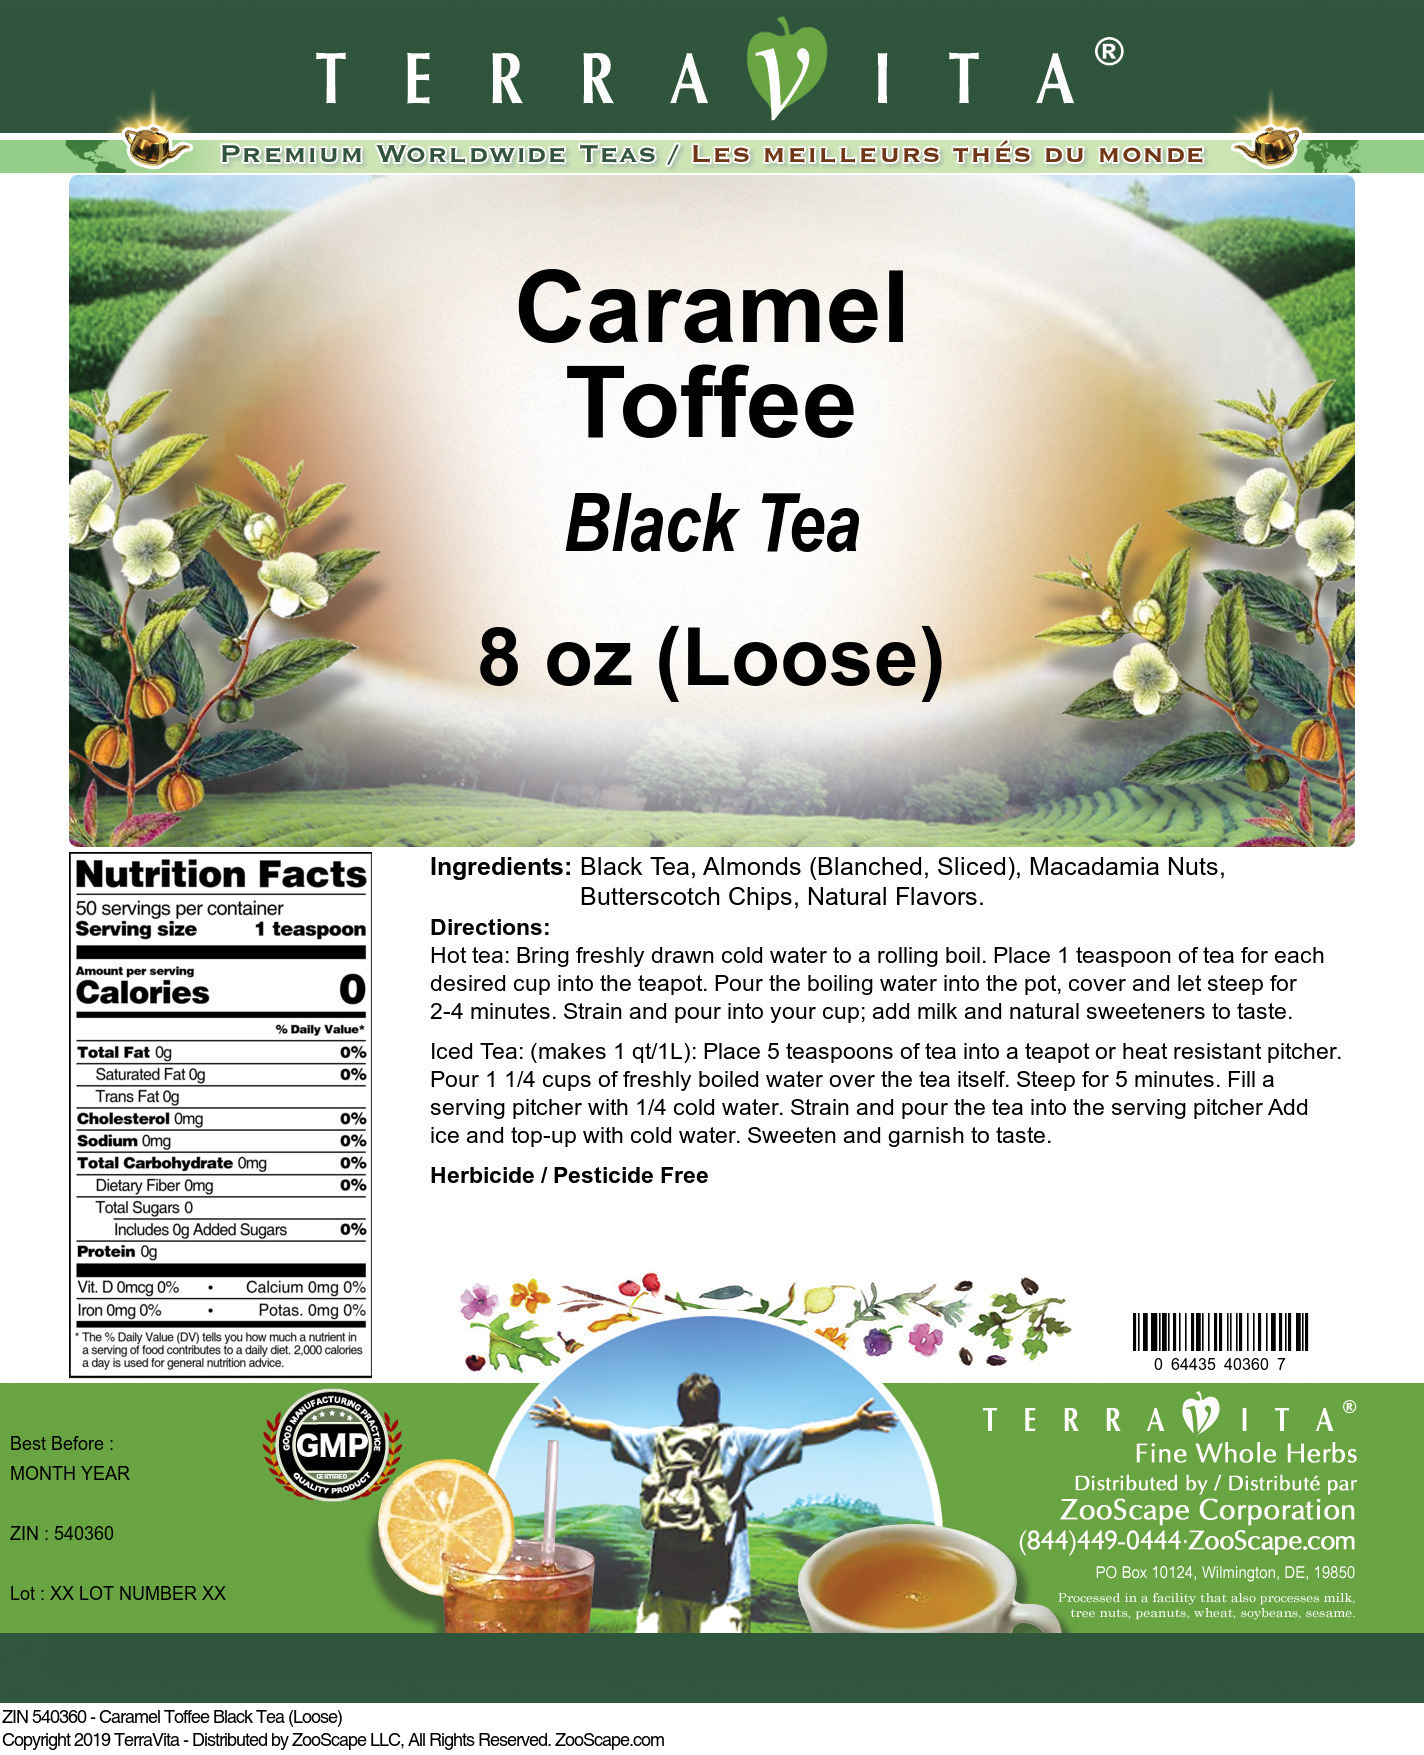 Caramel Toffee Black Tea (Loose) - Label